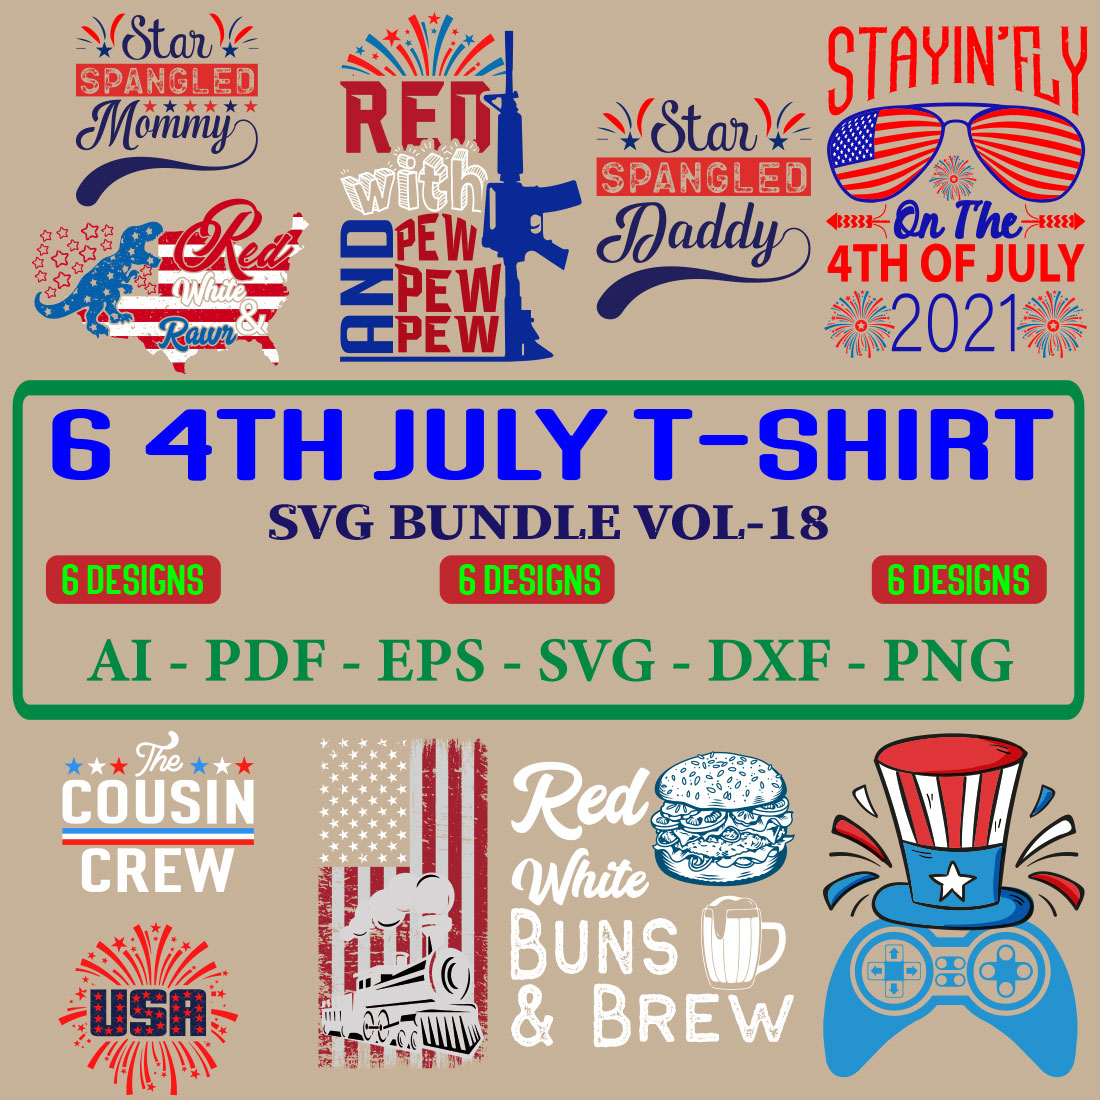 6 4th july T-shirt SVG Bundle Vol-18 cover image.